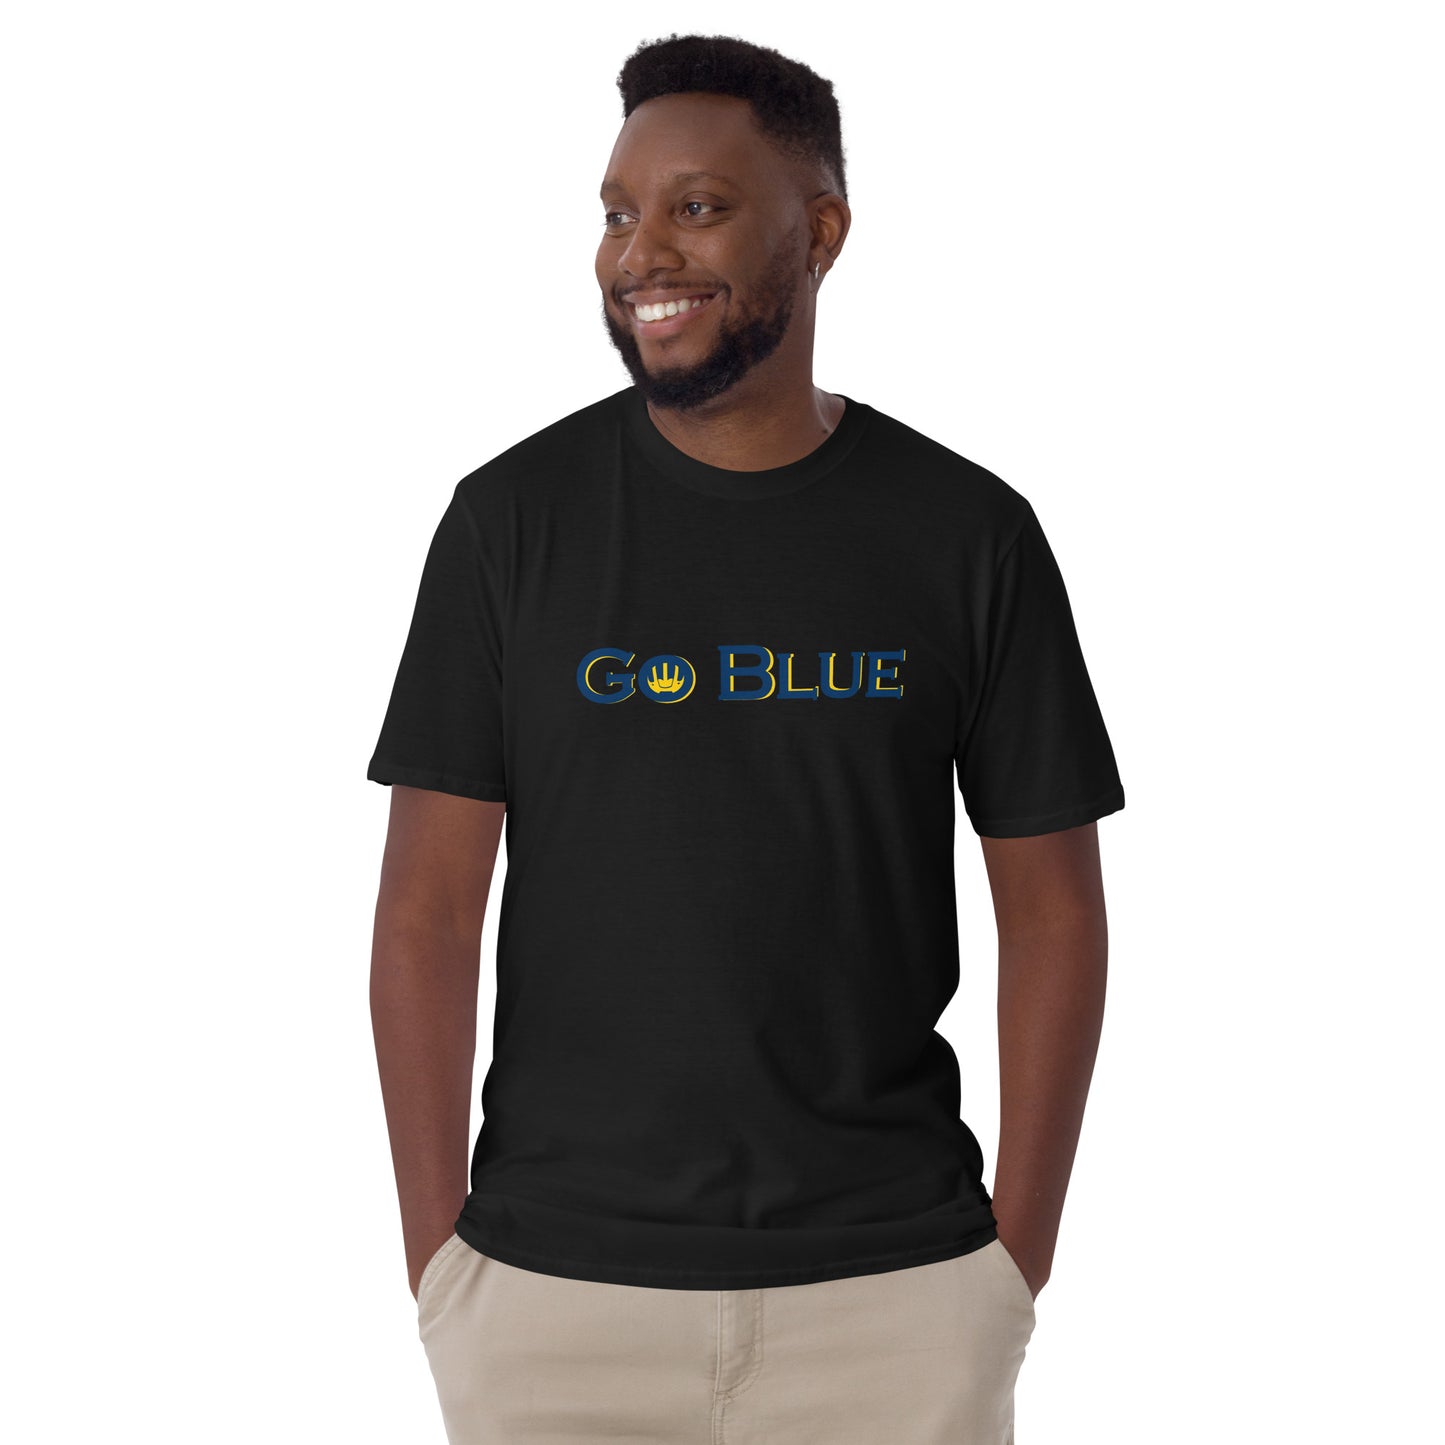 Go Blue Super Soft Short-Sleeve Unisex T-Shirt